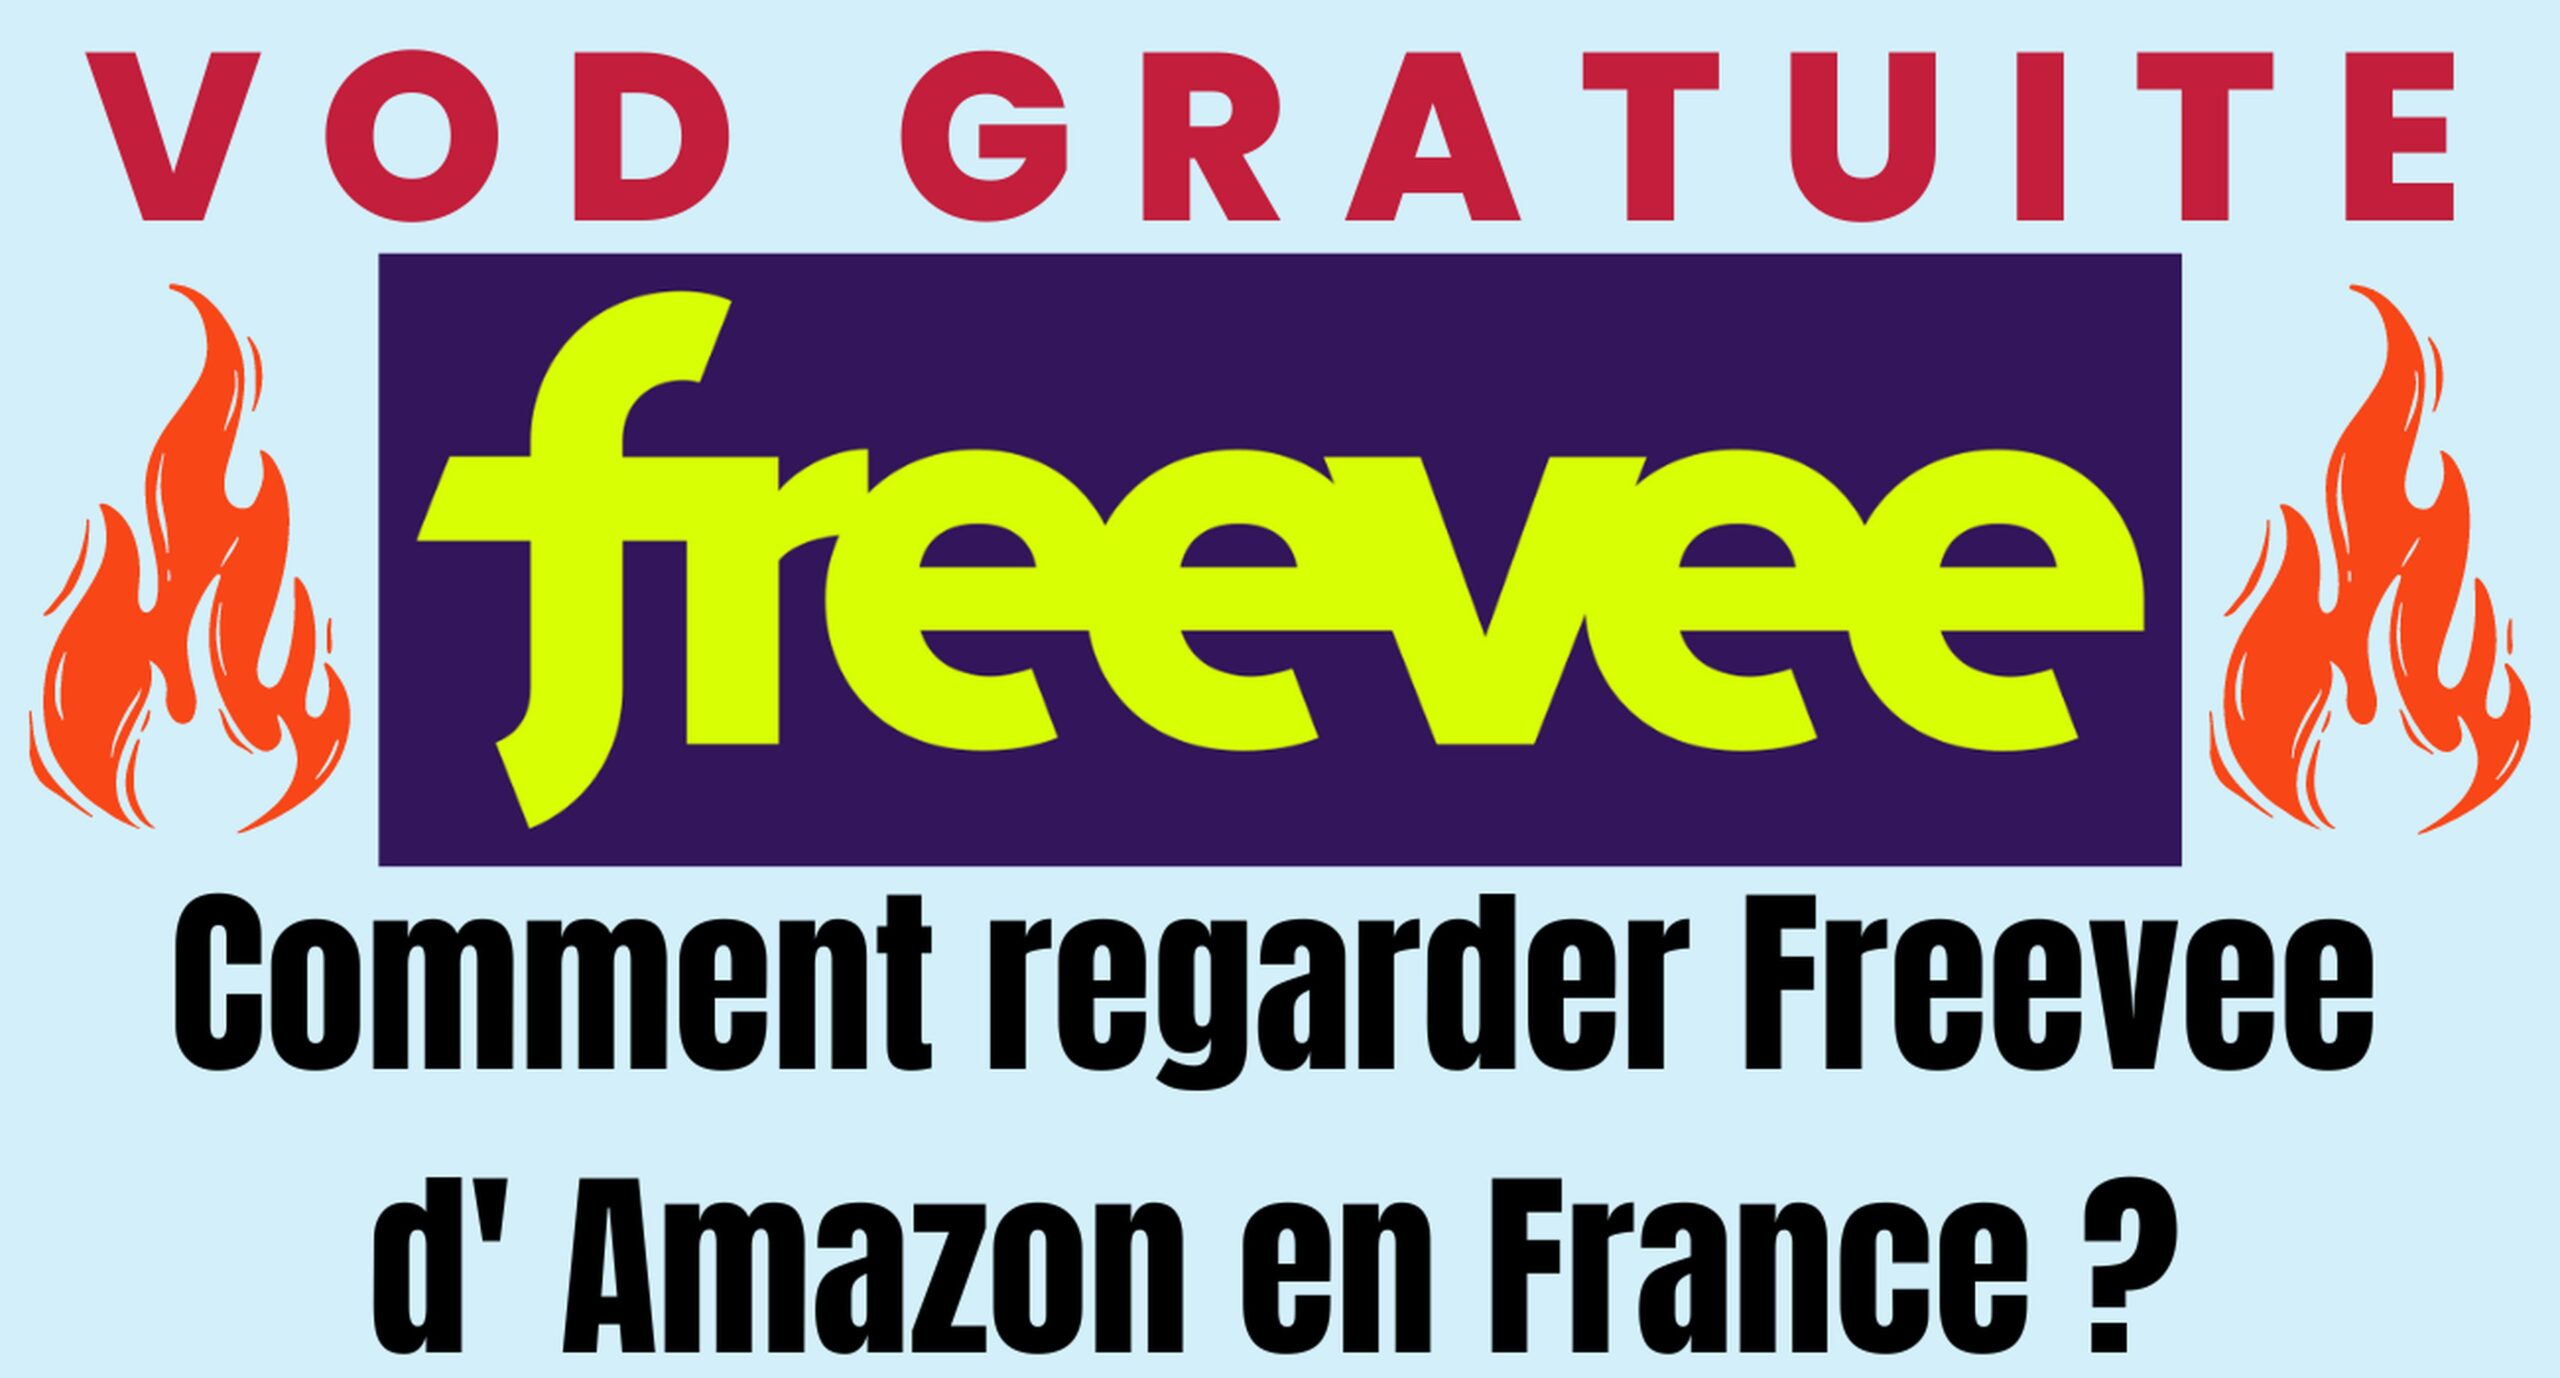 Freevee VOD - Service de streaming gratuit d’ Amazon 4